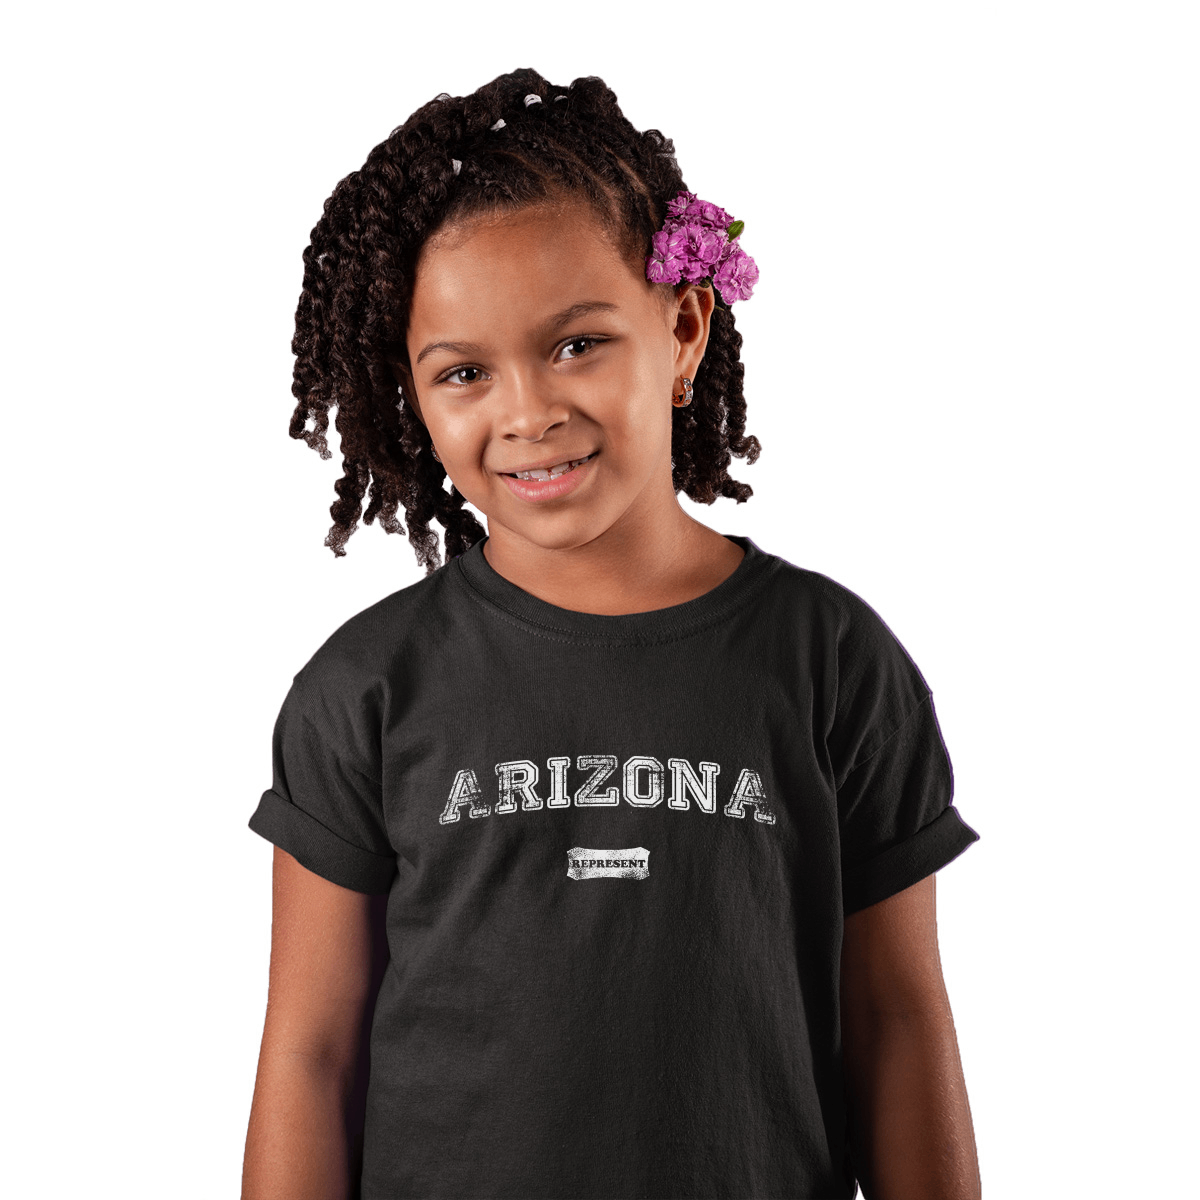 Arizona Represent Toddler T-shirt | Black